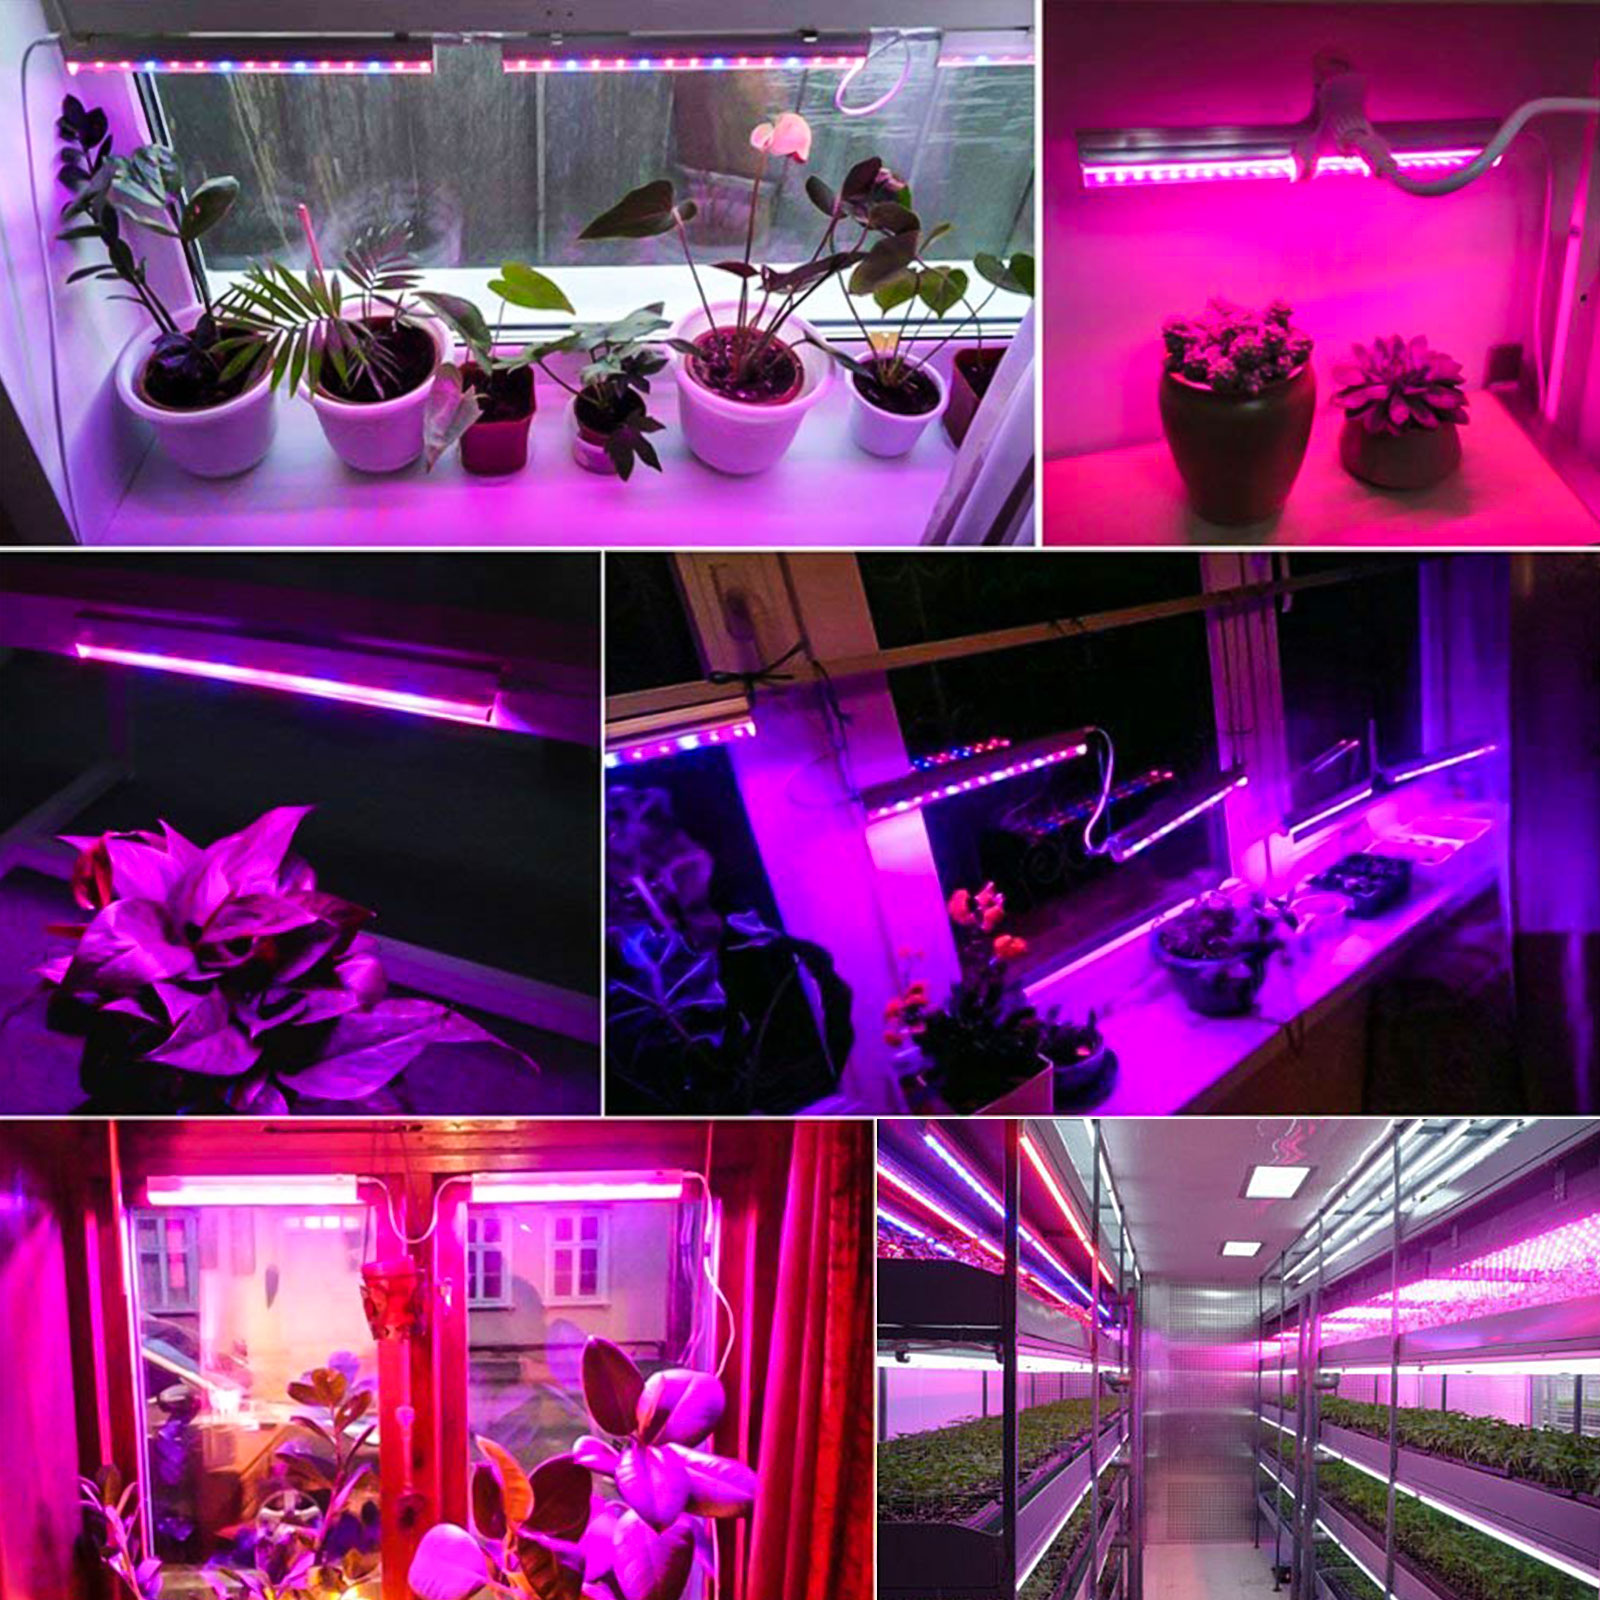 Details about   LED Grow Waterproof Light Strip Full Spectrum Lamp for Indoor Plant Veg Flower 